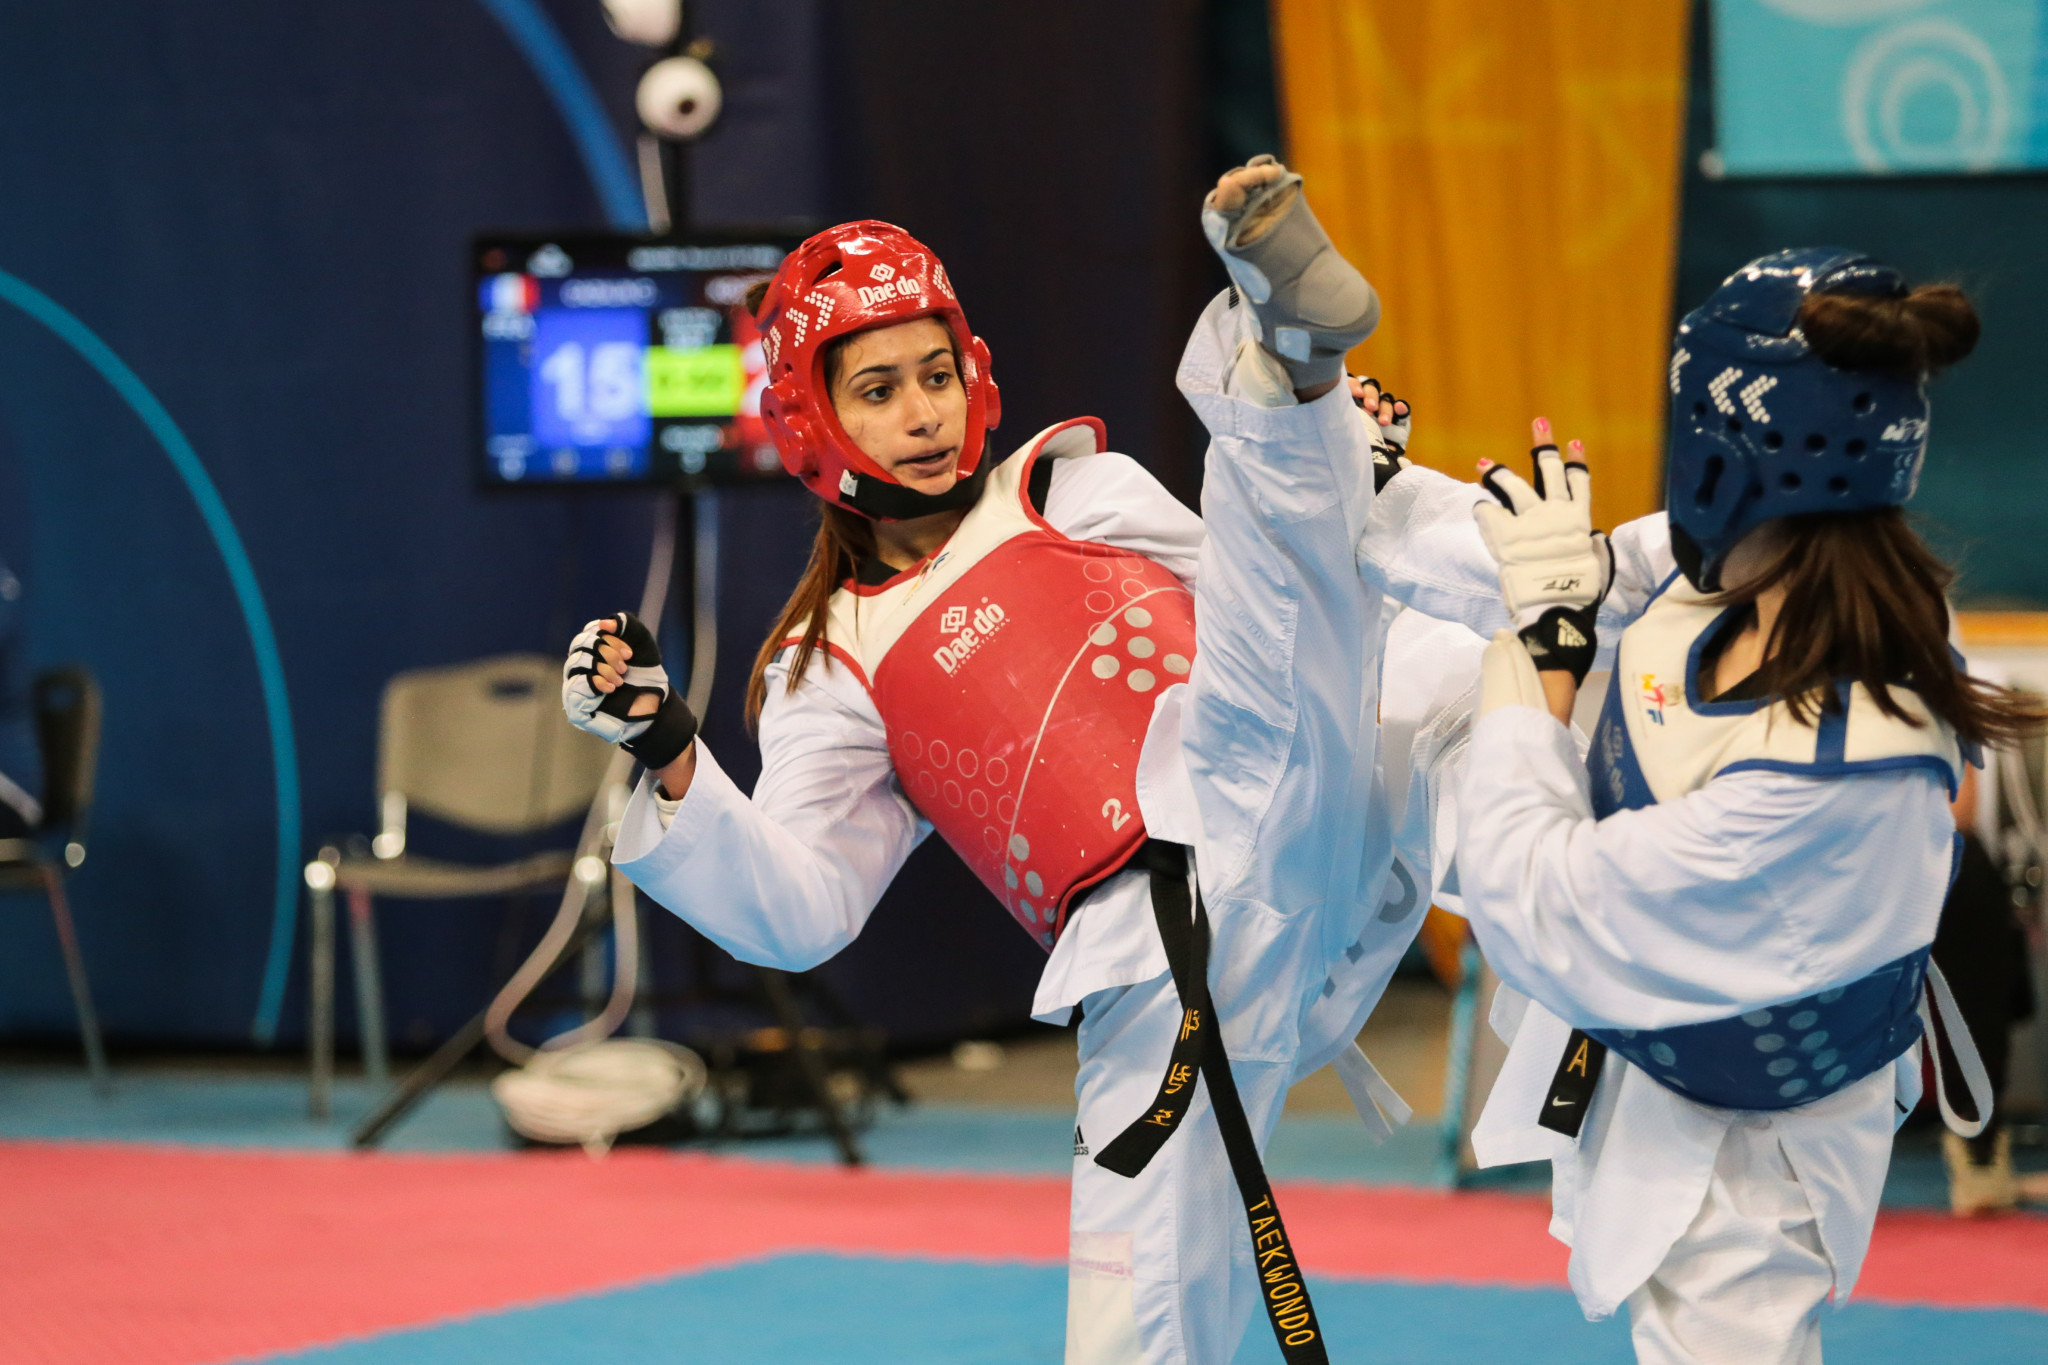 Cyprus' Kyriaki Kouttouki finished second in the women's under 46kg category ©World Taekwondo Europe